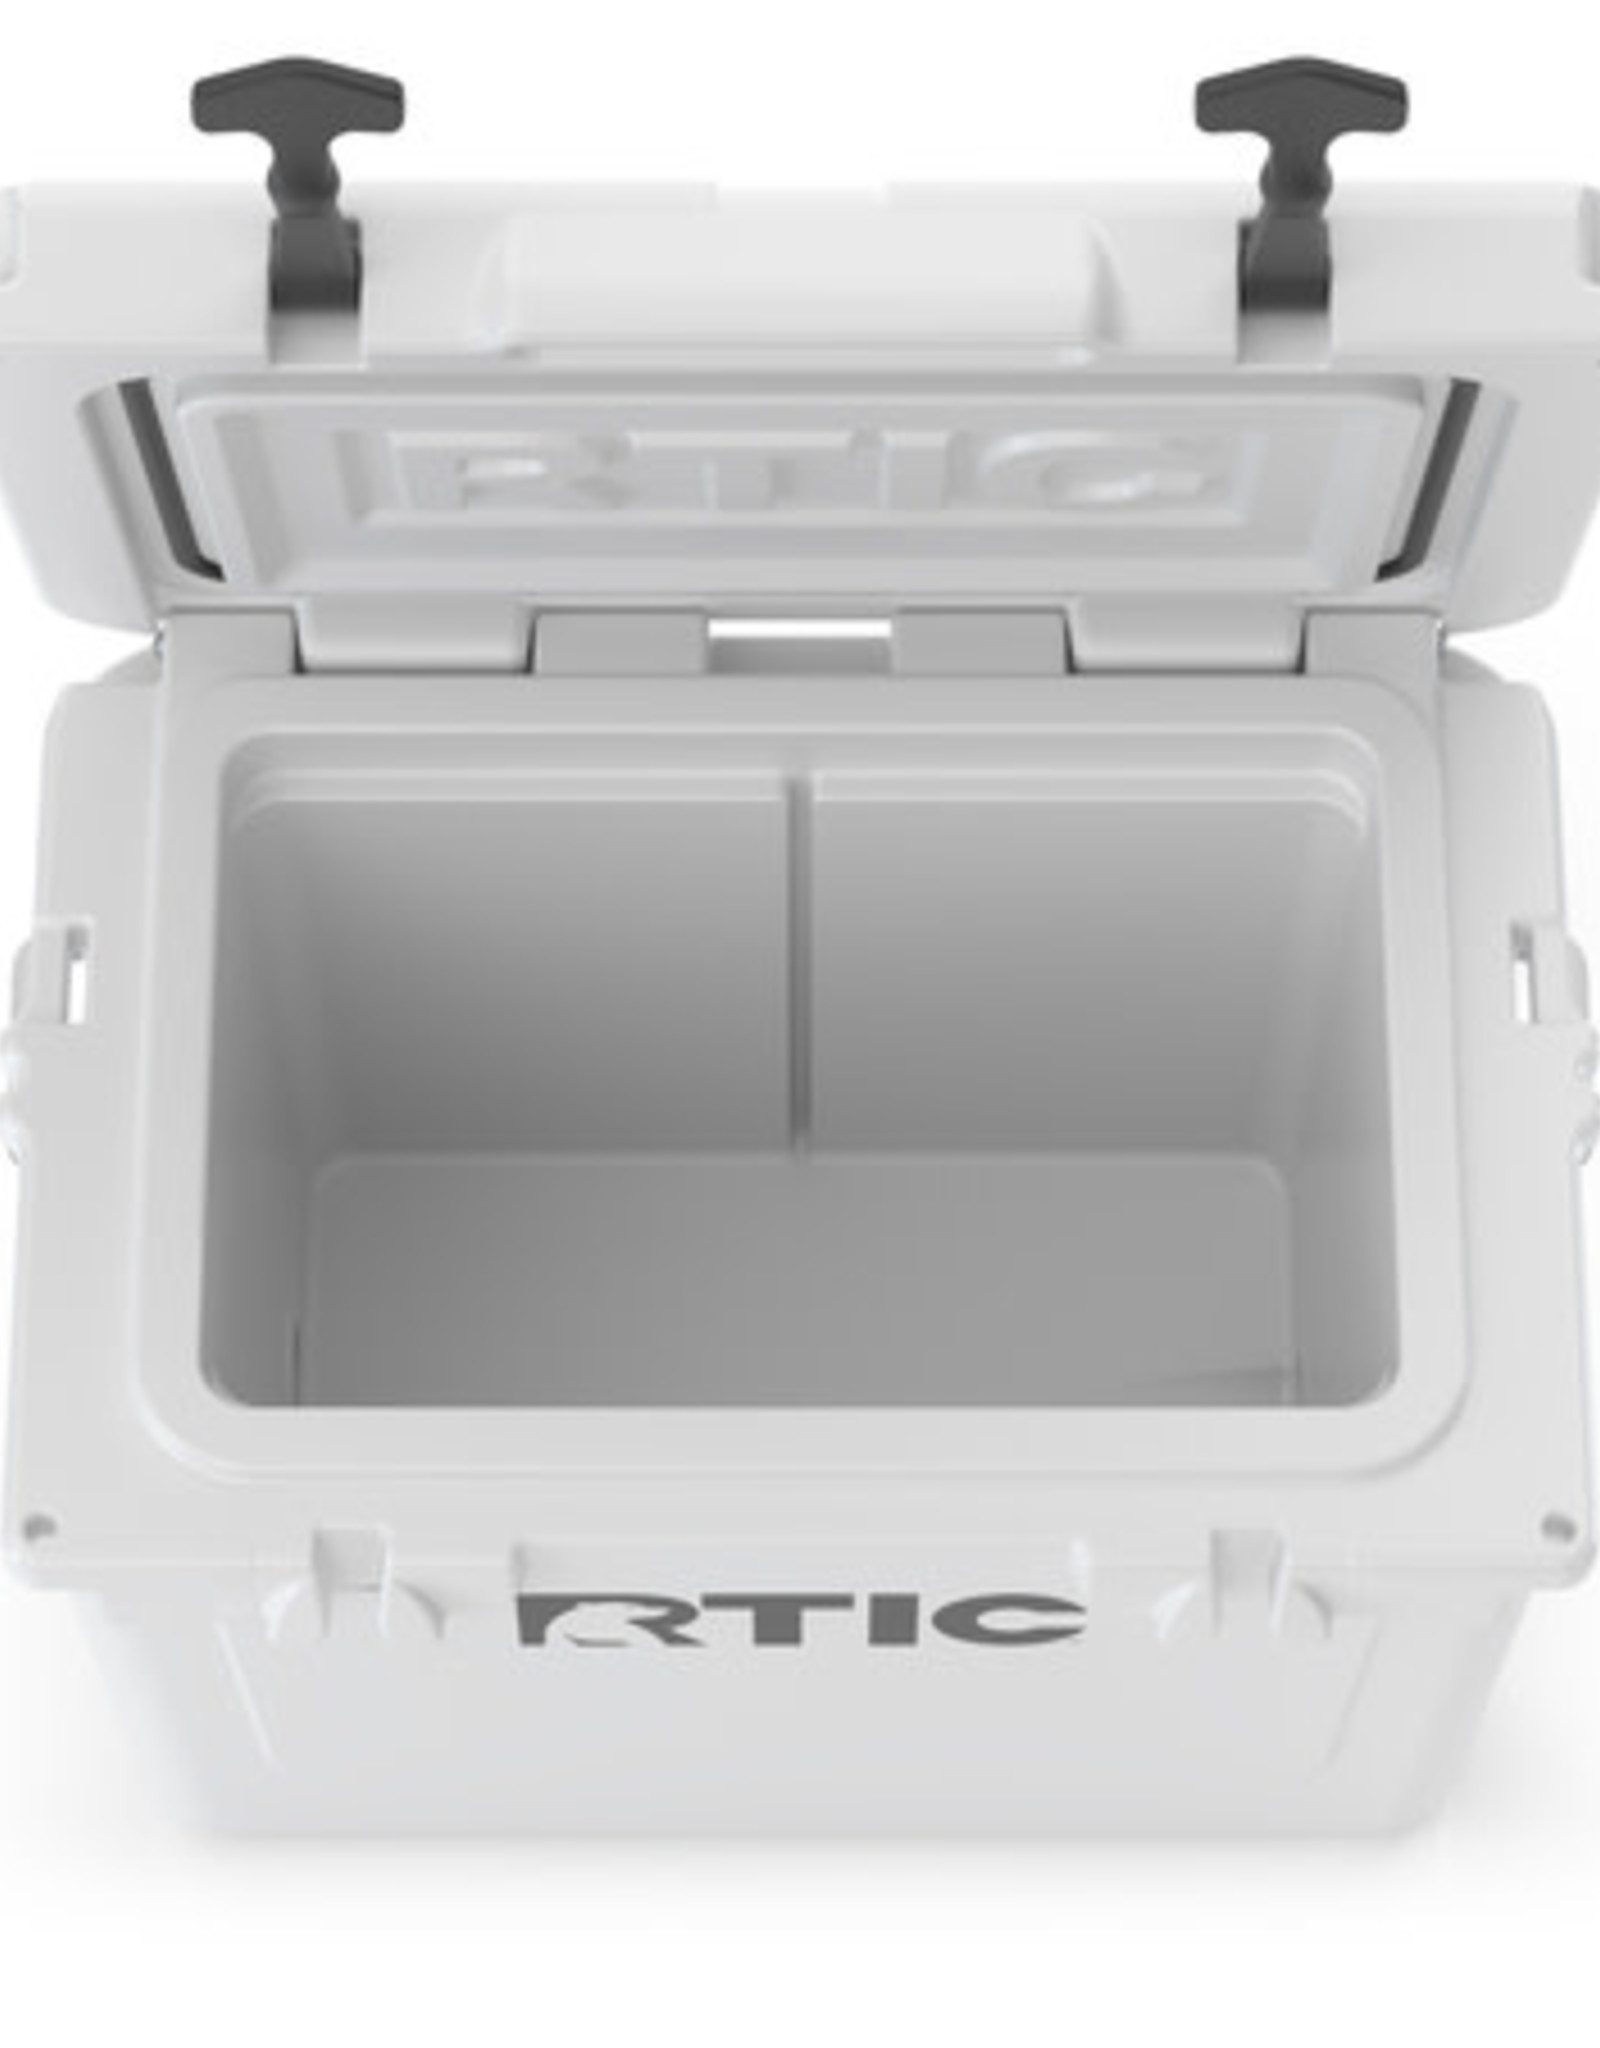 RTIC RTIC 20 White